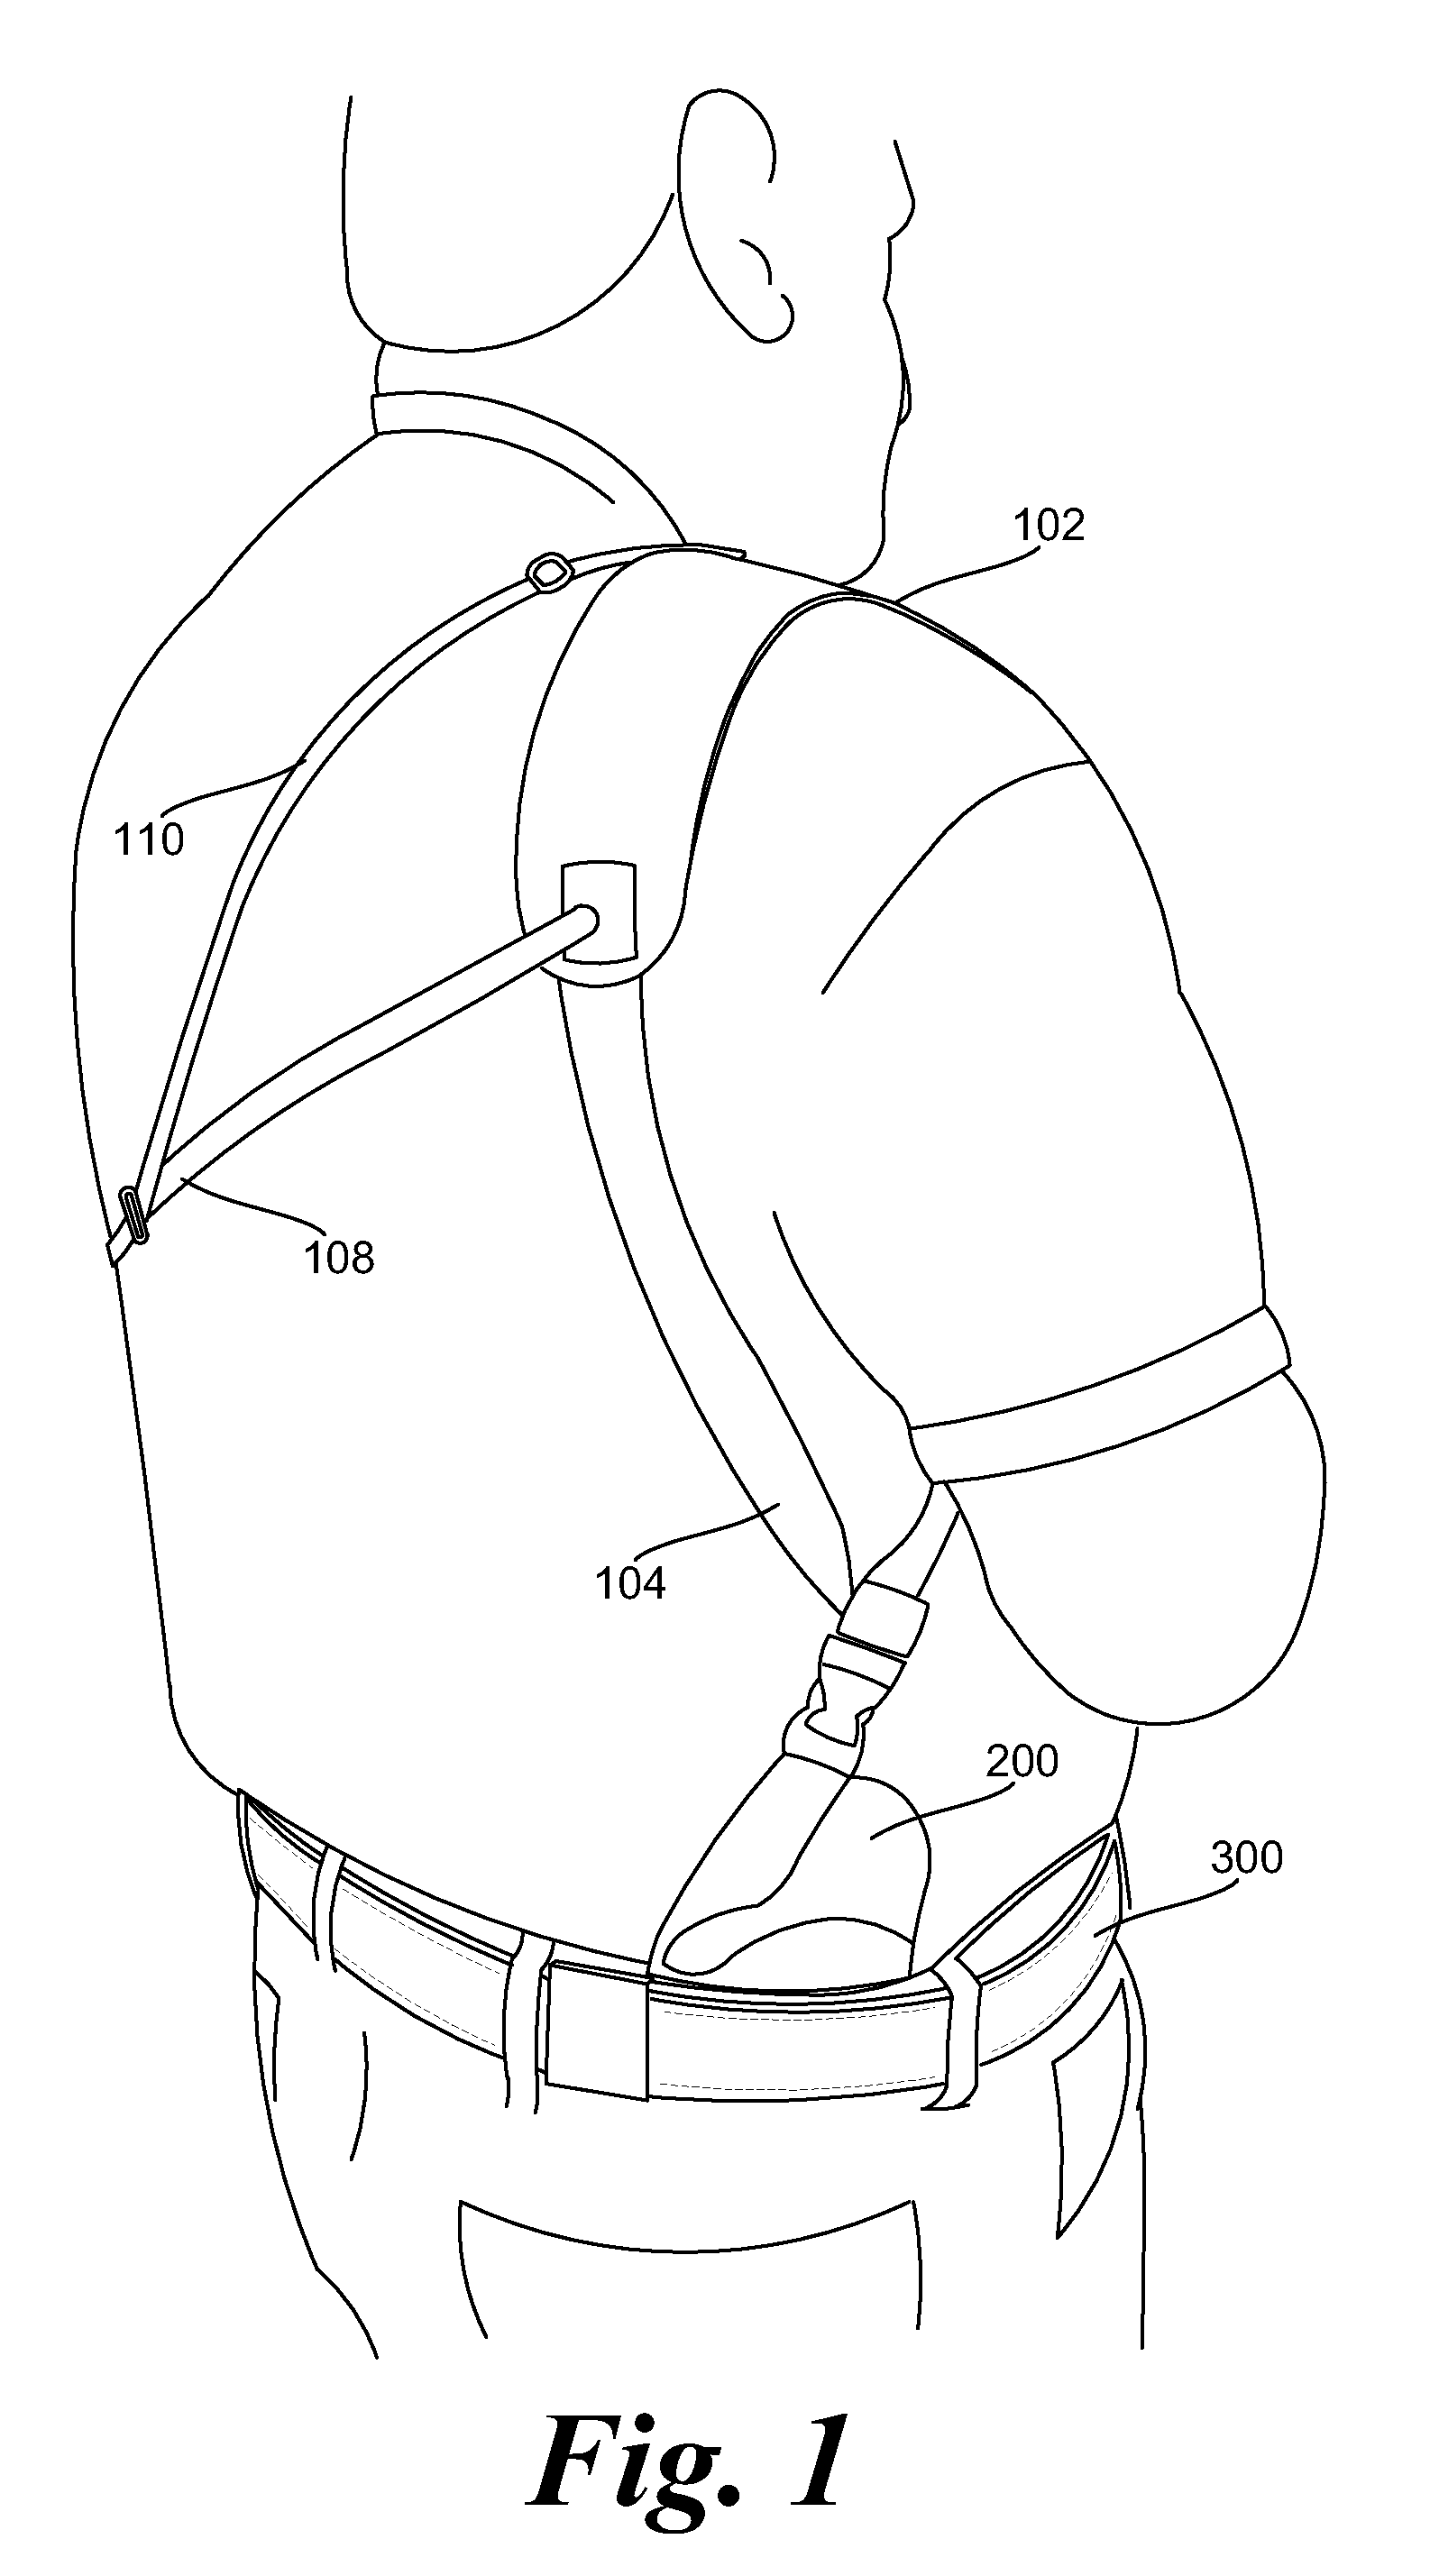 Method and system for an over the shoulder holster belt